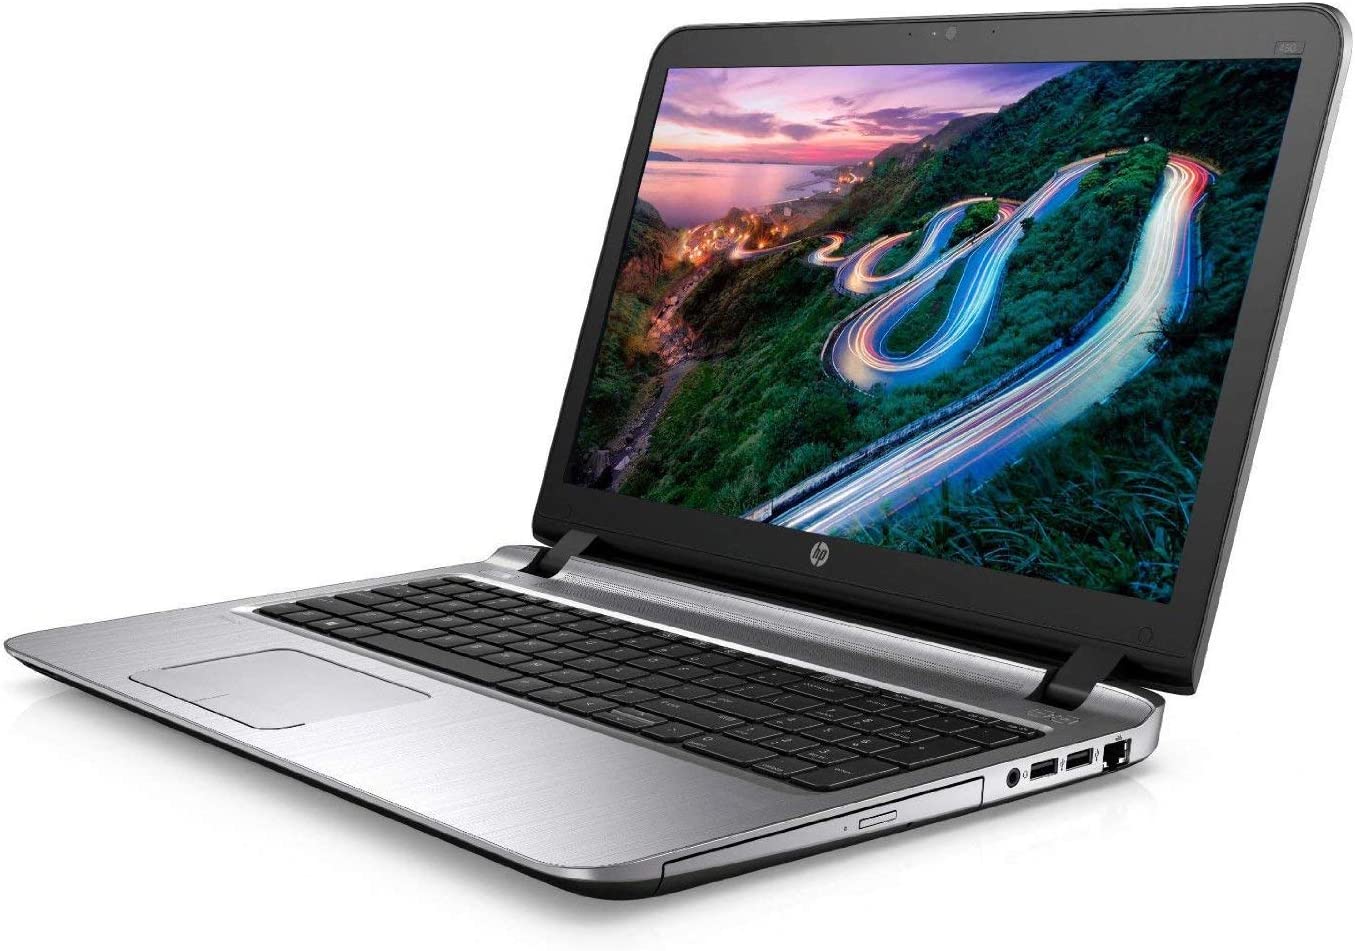 HP Probook 450 G2 Core i5-4200M 2.50 GHZ , 17.3 inches hd display windows 10 Pro (Renewed)